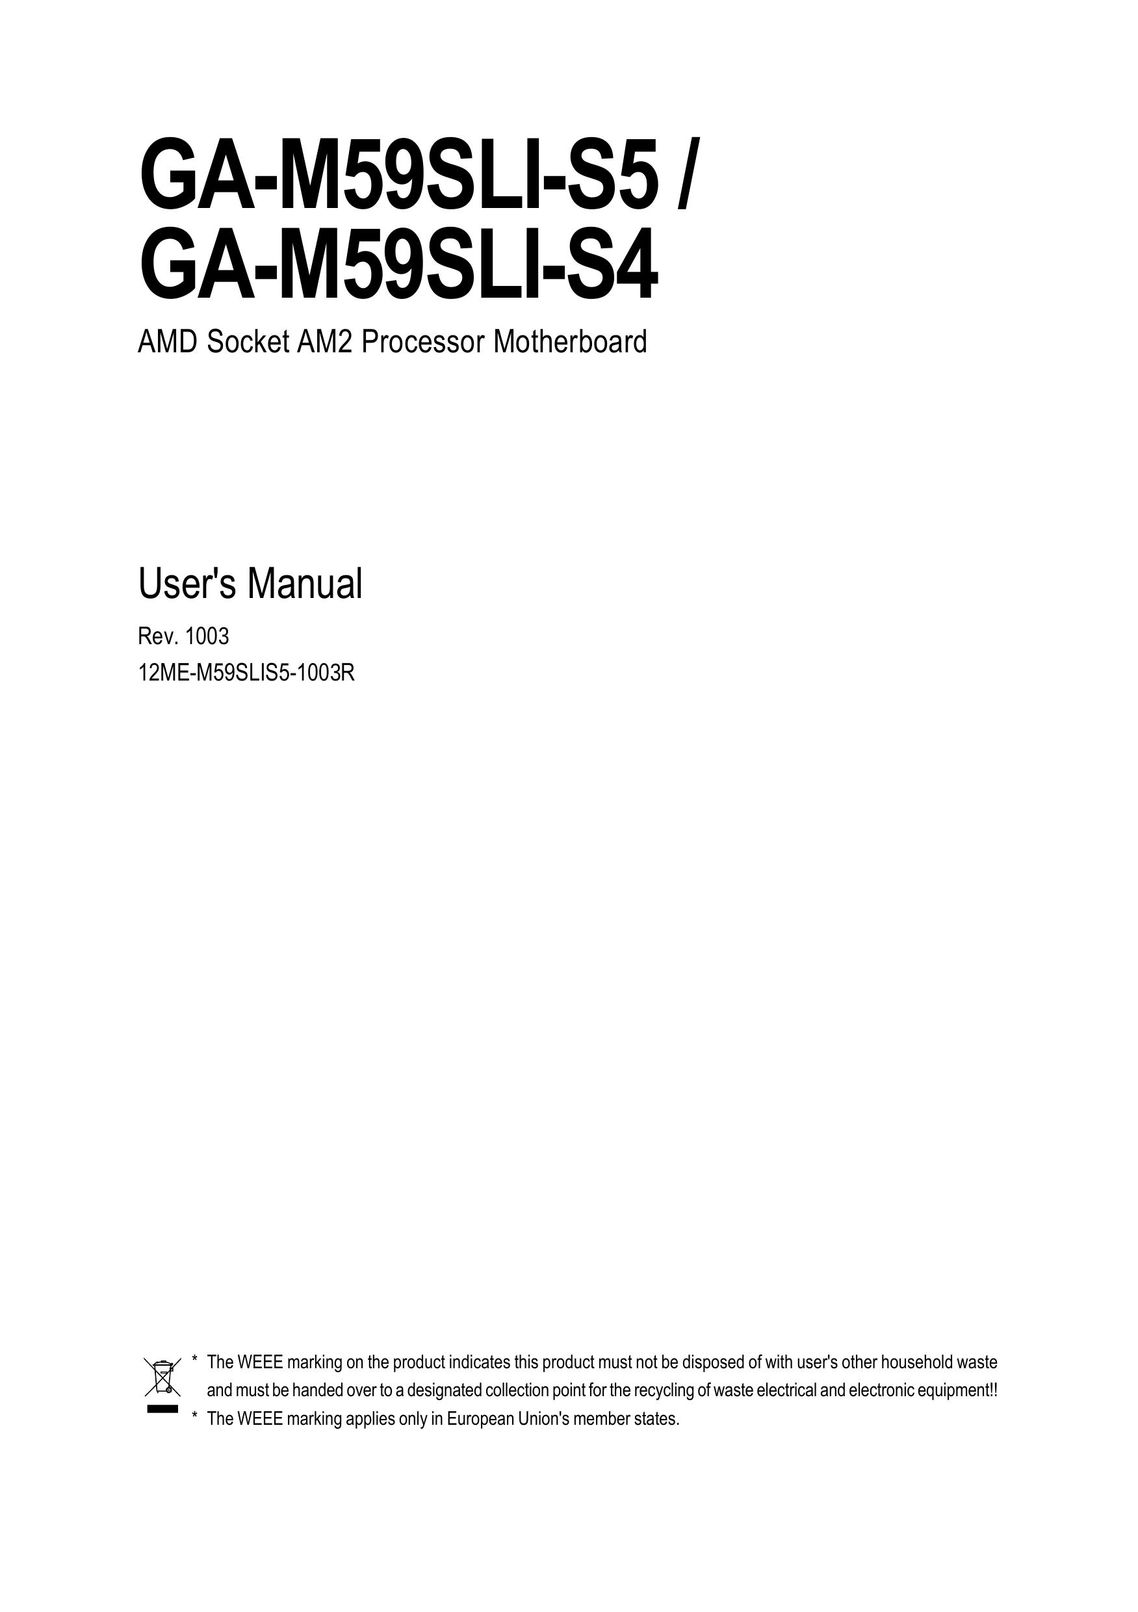 Gigabyte GA-M59SLI-S5 Personal Computer User Manual